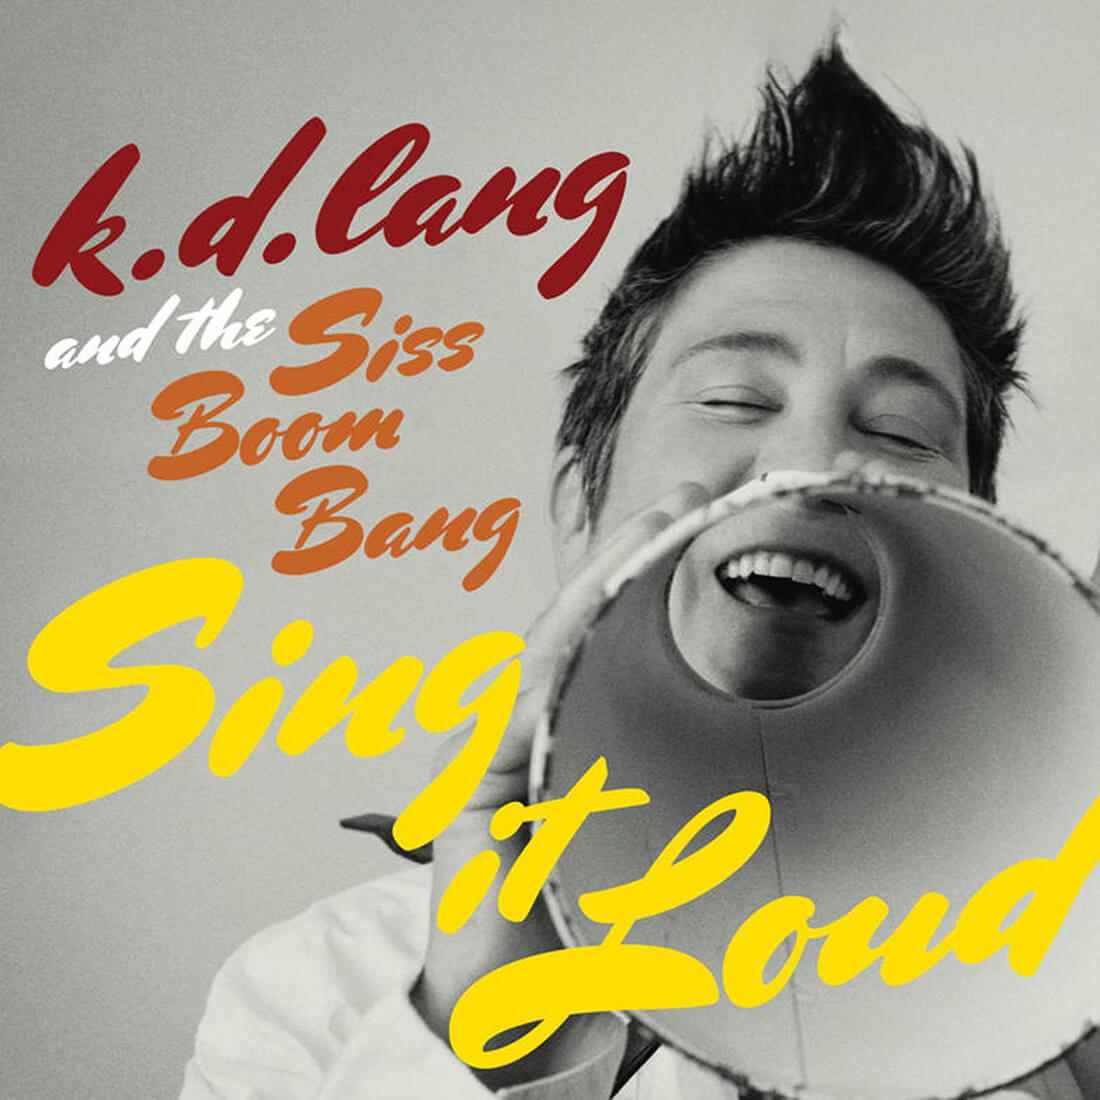 k.d. lang and the siss boom bang sing it loud